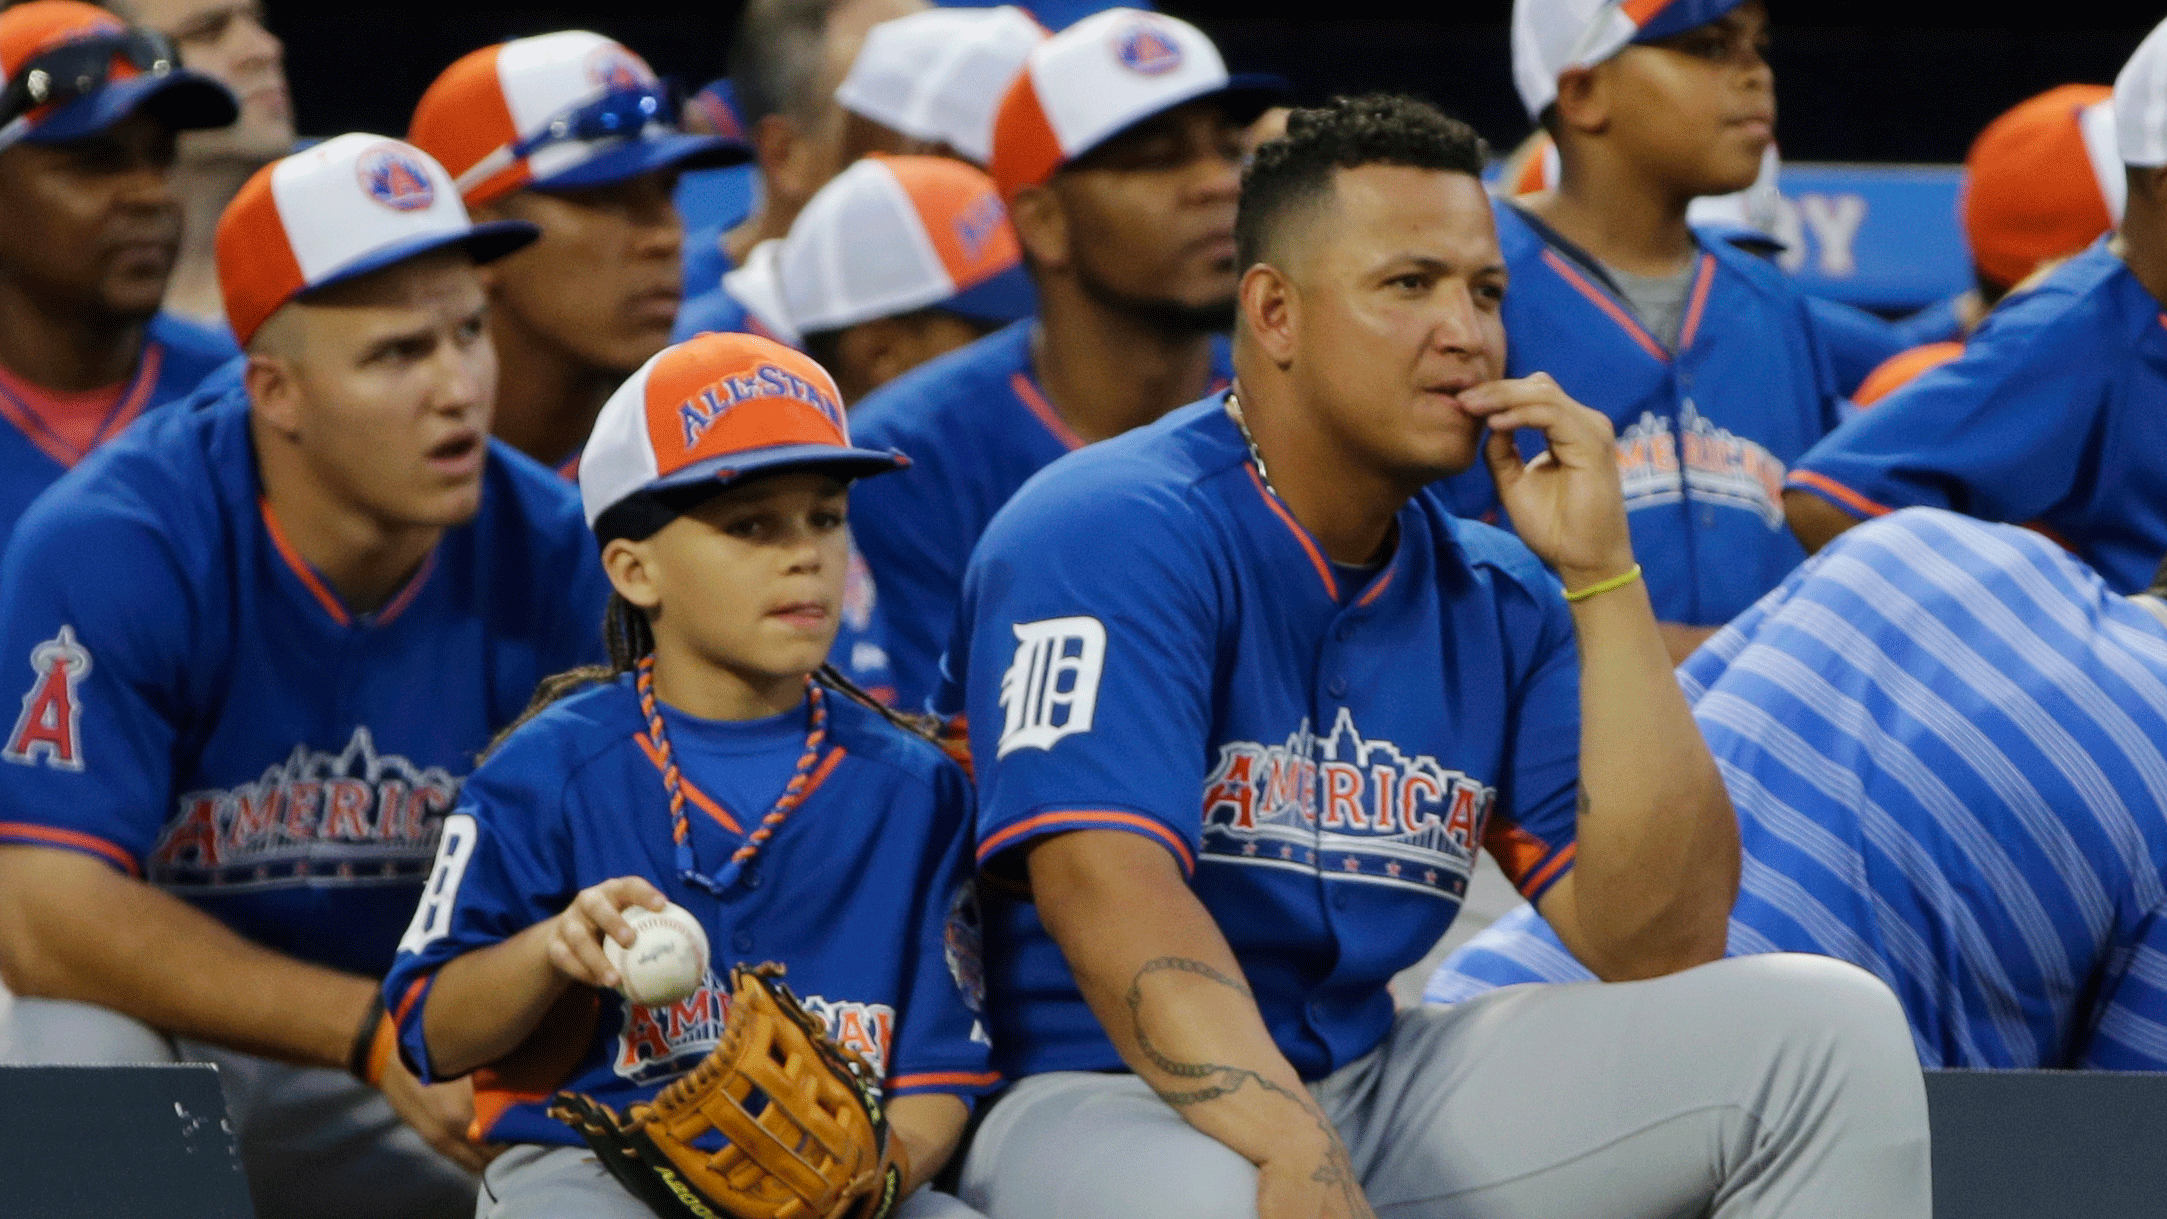 Members of the American League All-Star team and children look on. (AP/Matt Slocum)